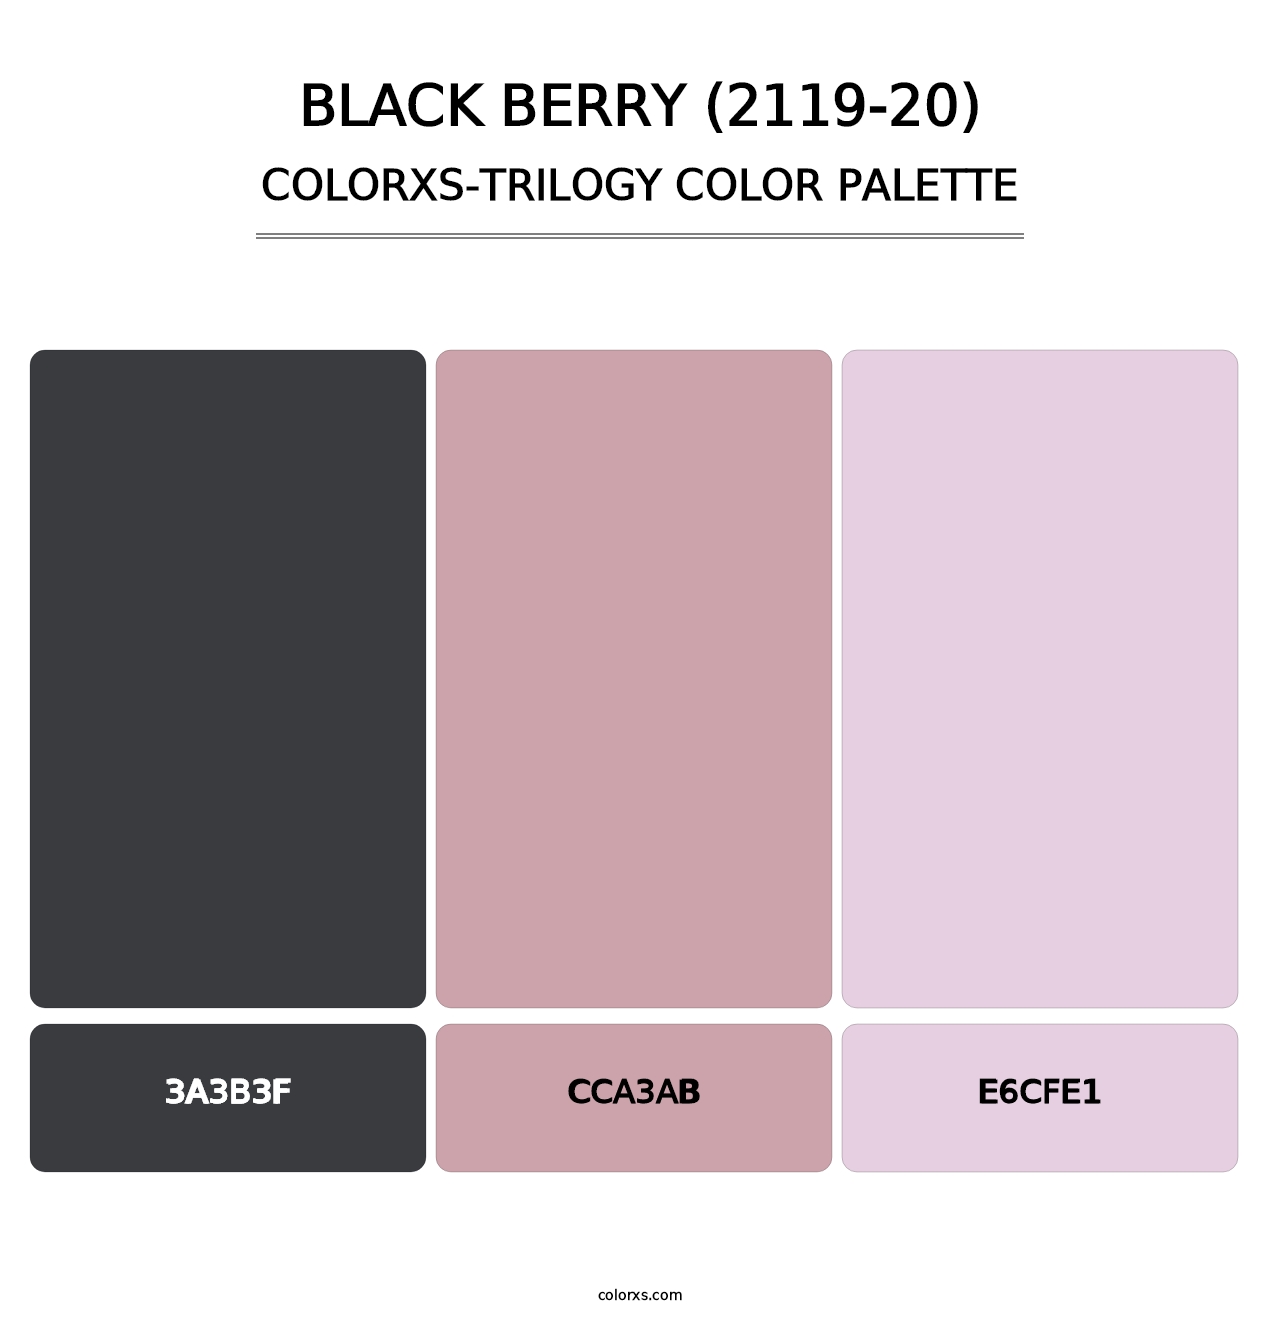 Black Berry (2119-20) - Colorxs Trilogy Palette